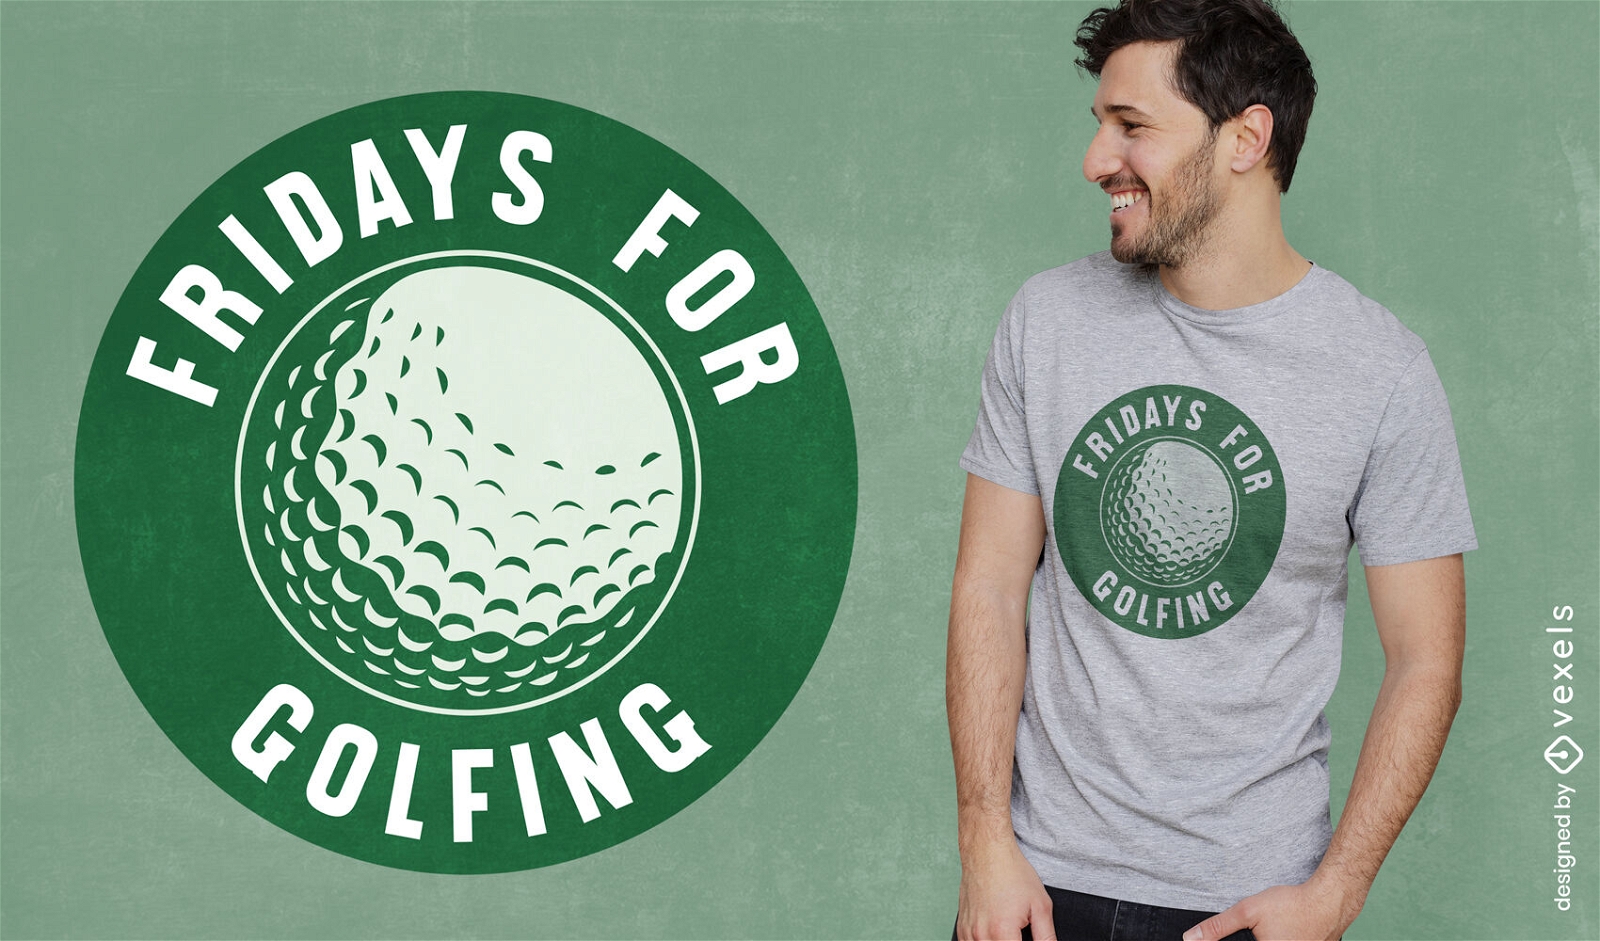 Fridays for golfing label t-shirt design